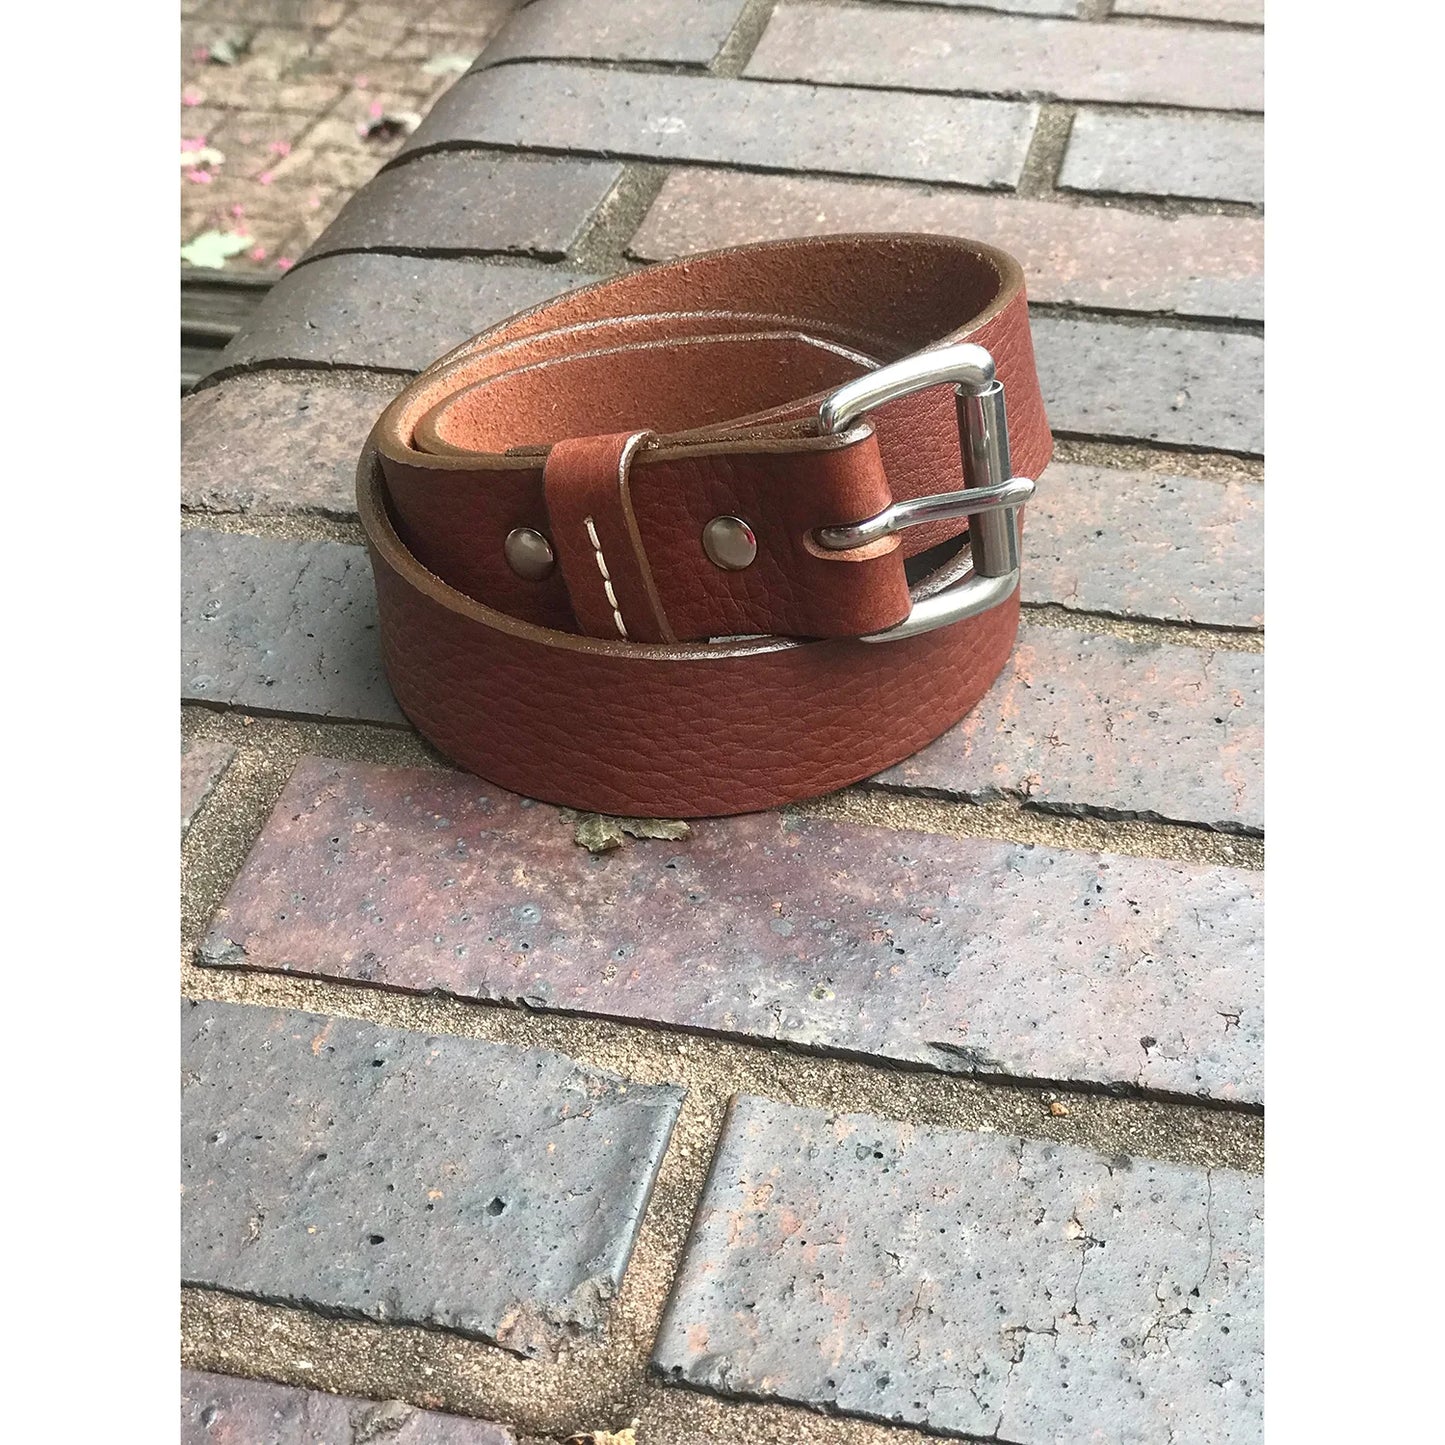 Brenneman's Leather Belt (3 colors)